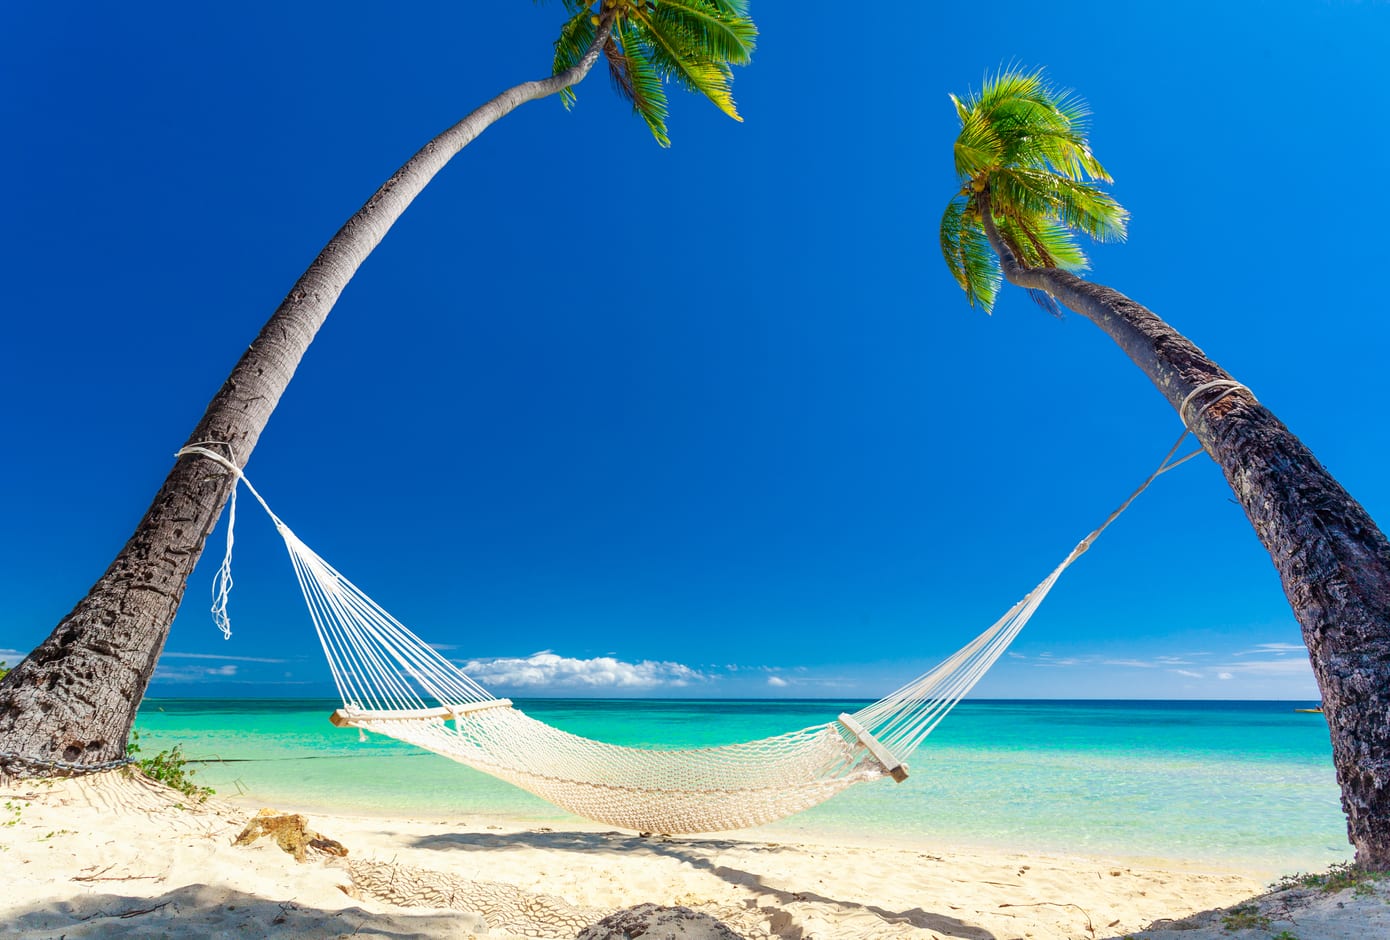 Empty hammock in the shade of palm trees on Fiji Islands
